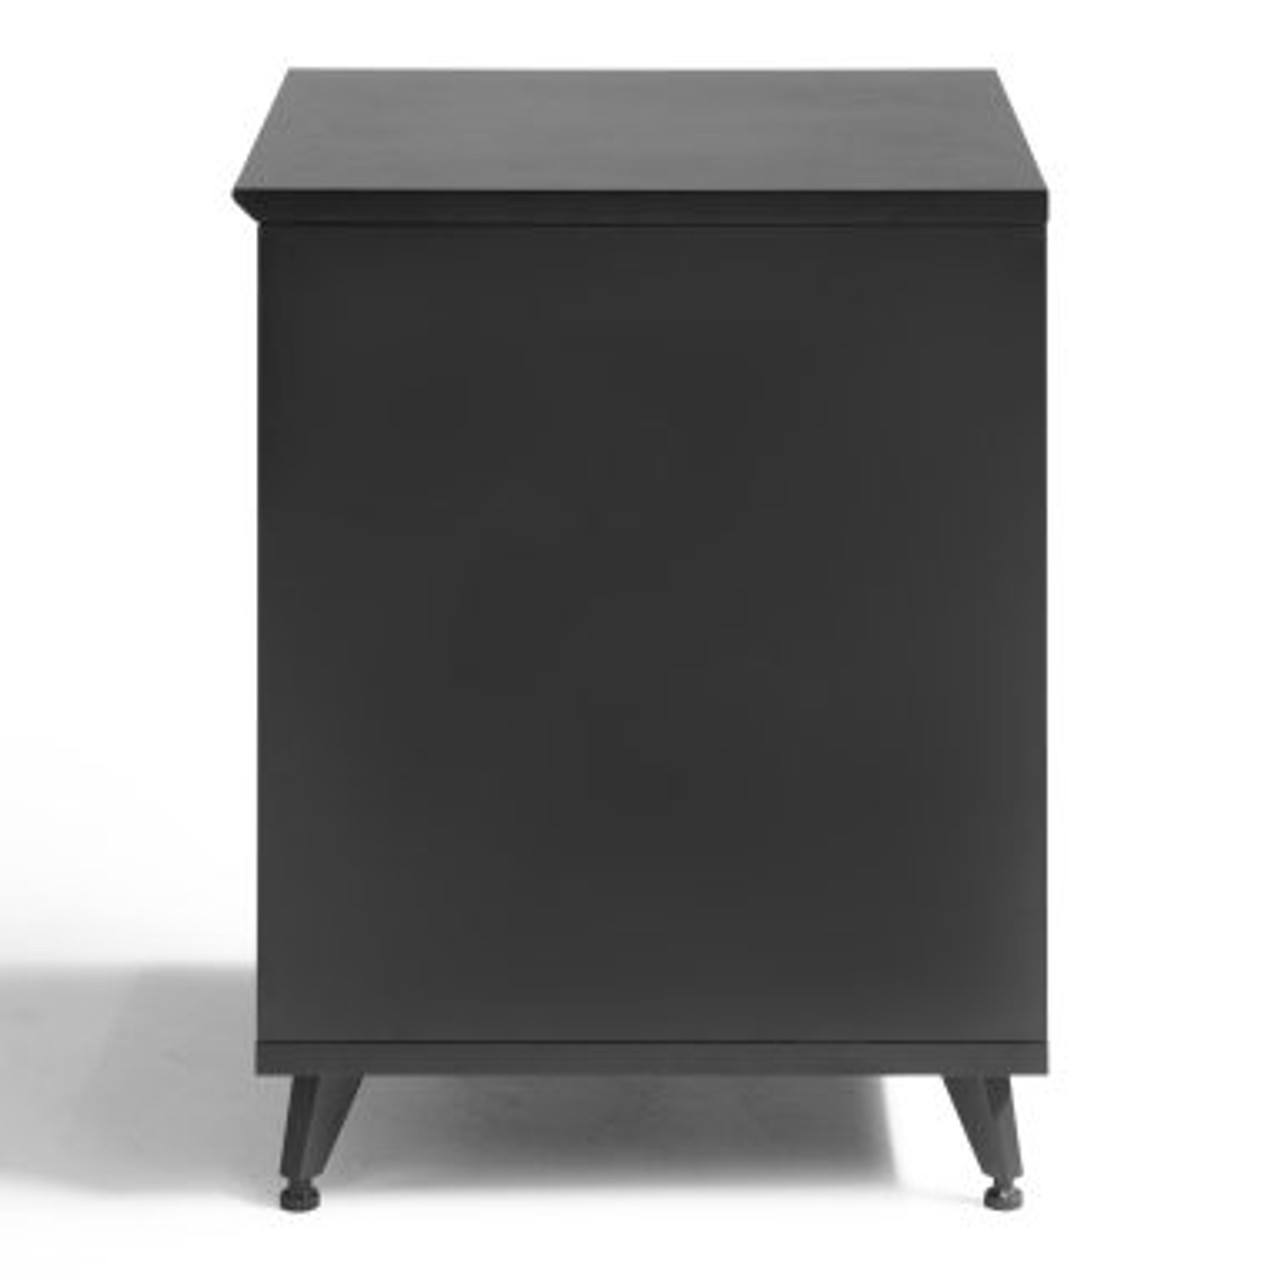 Gator GFW-ELITEDESKRK-BLK Elite Furniture Series 10U Studio Rack Table In Black Finish 